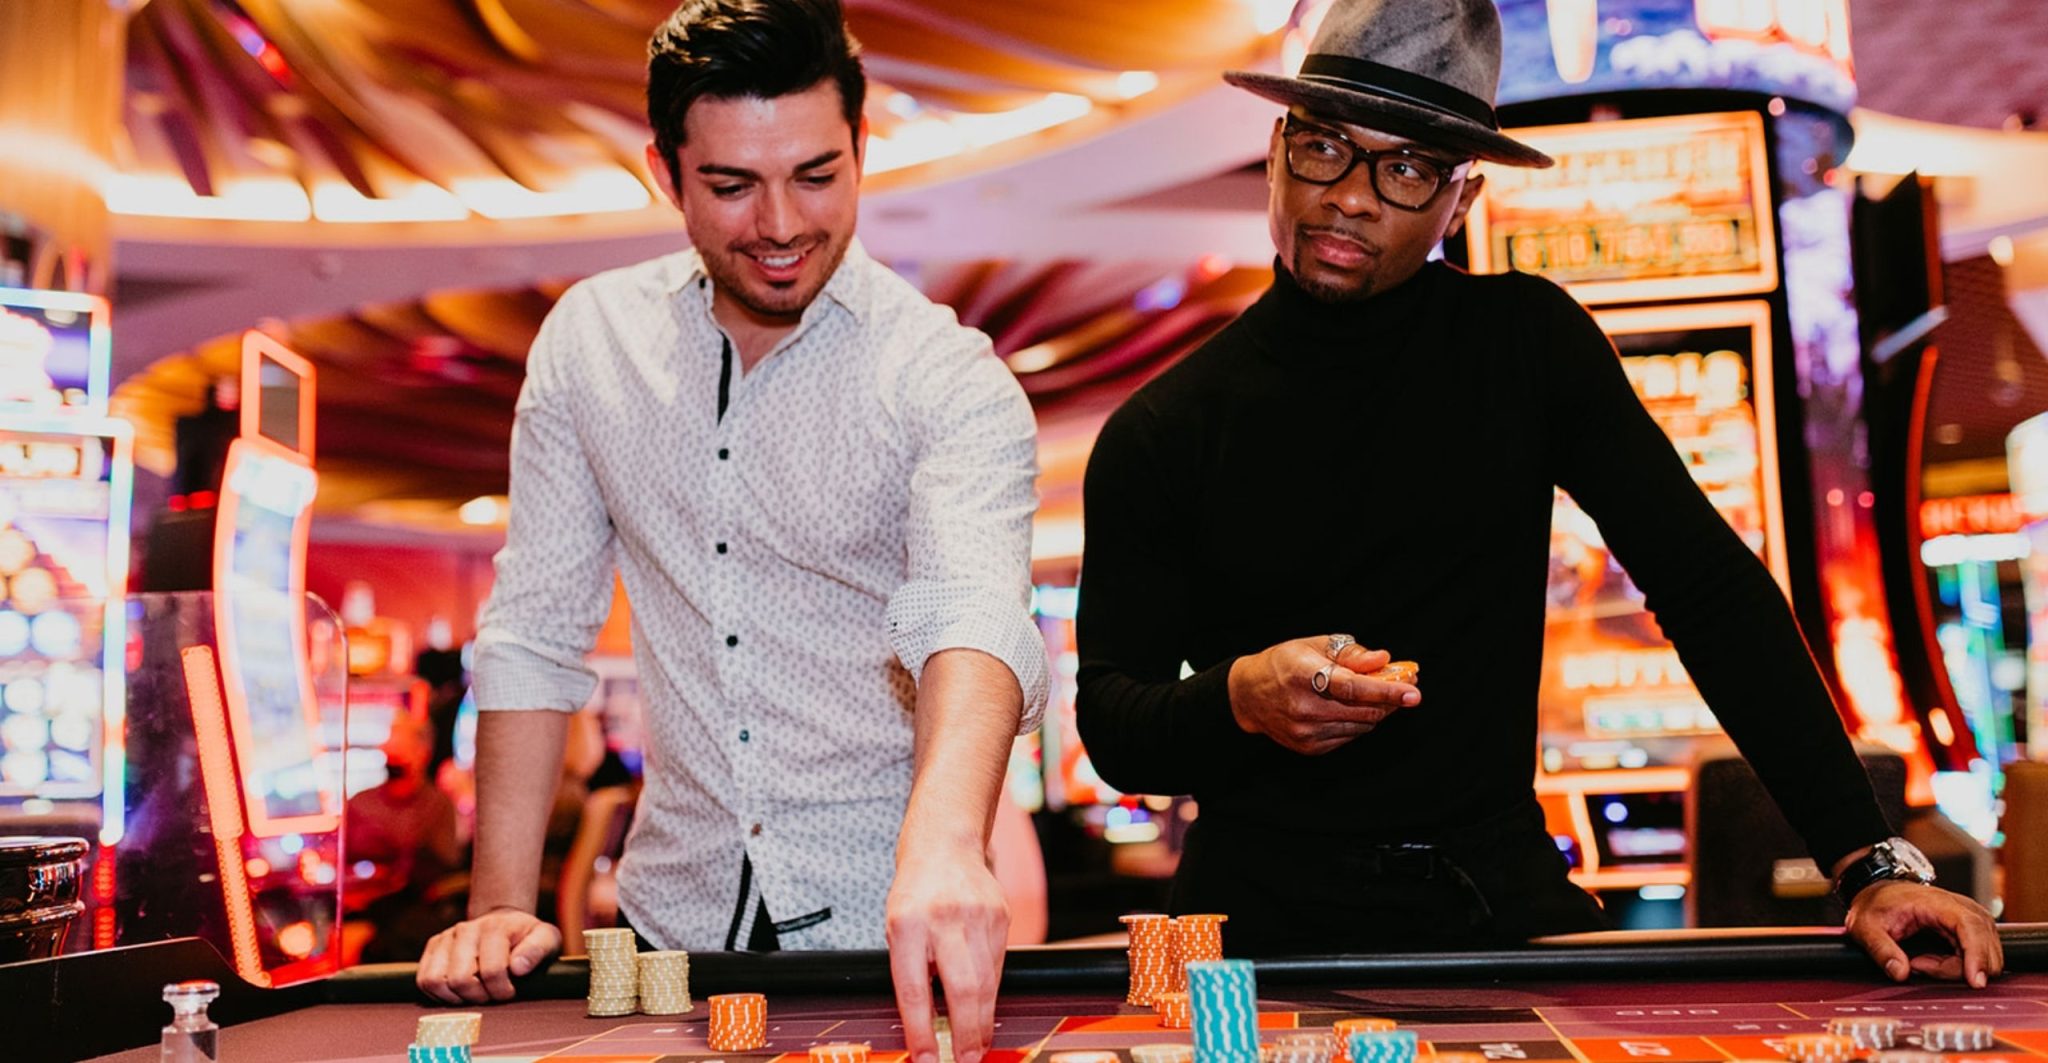 SAHARA Las Vegas Casino Gaming - Distinctive Gaming